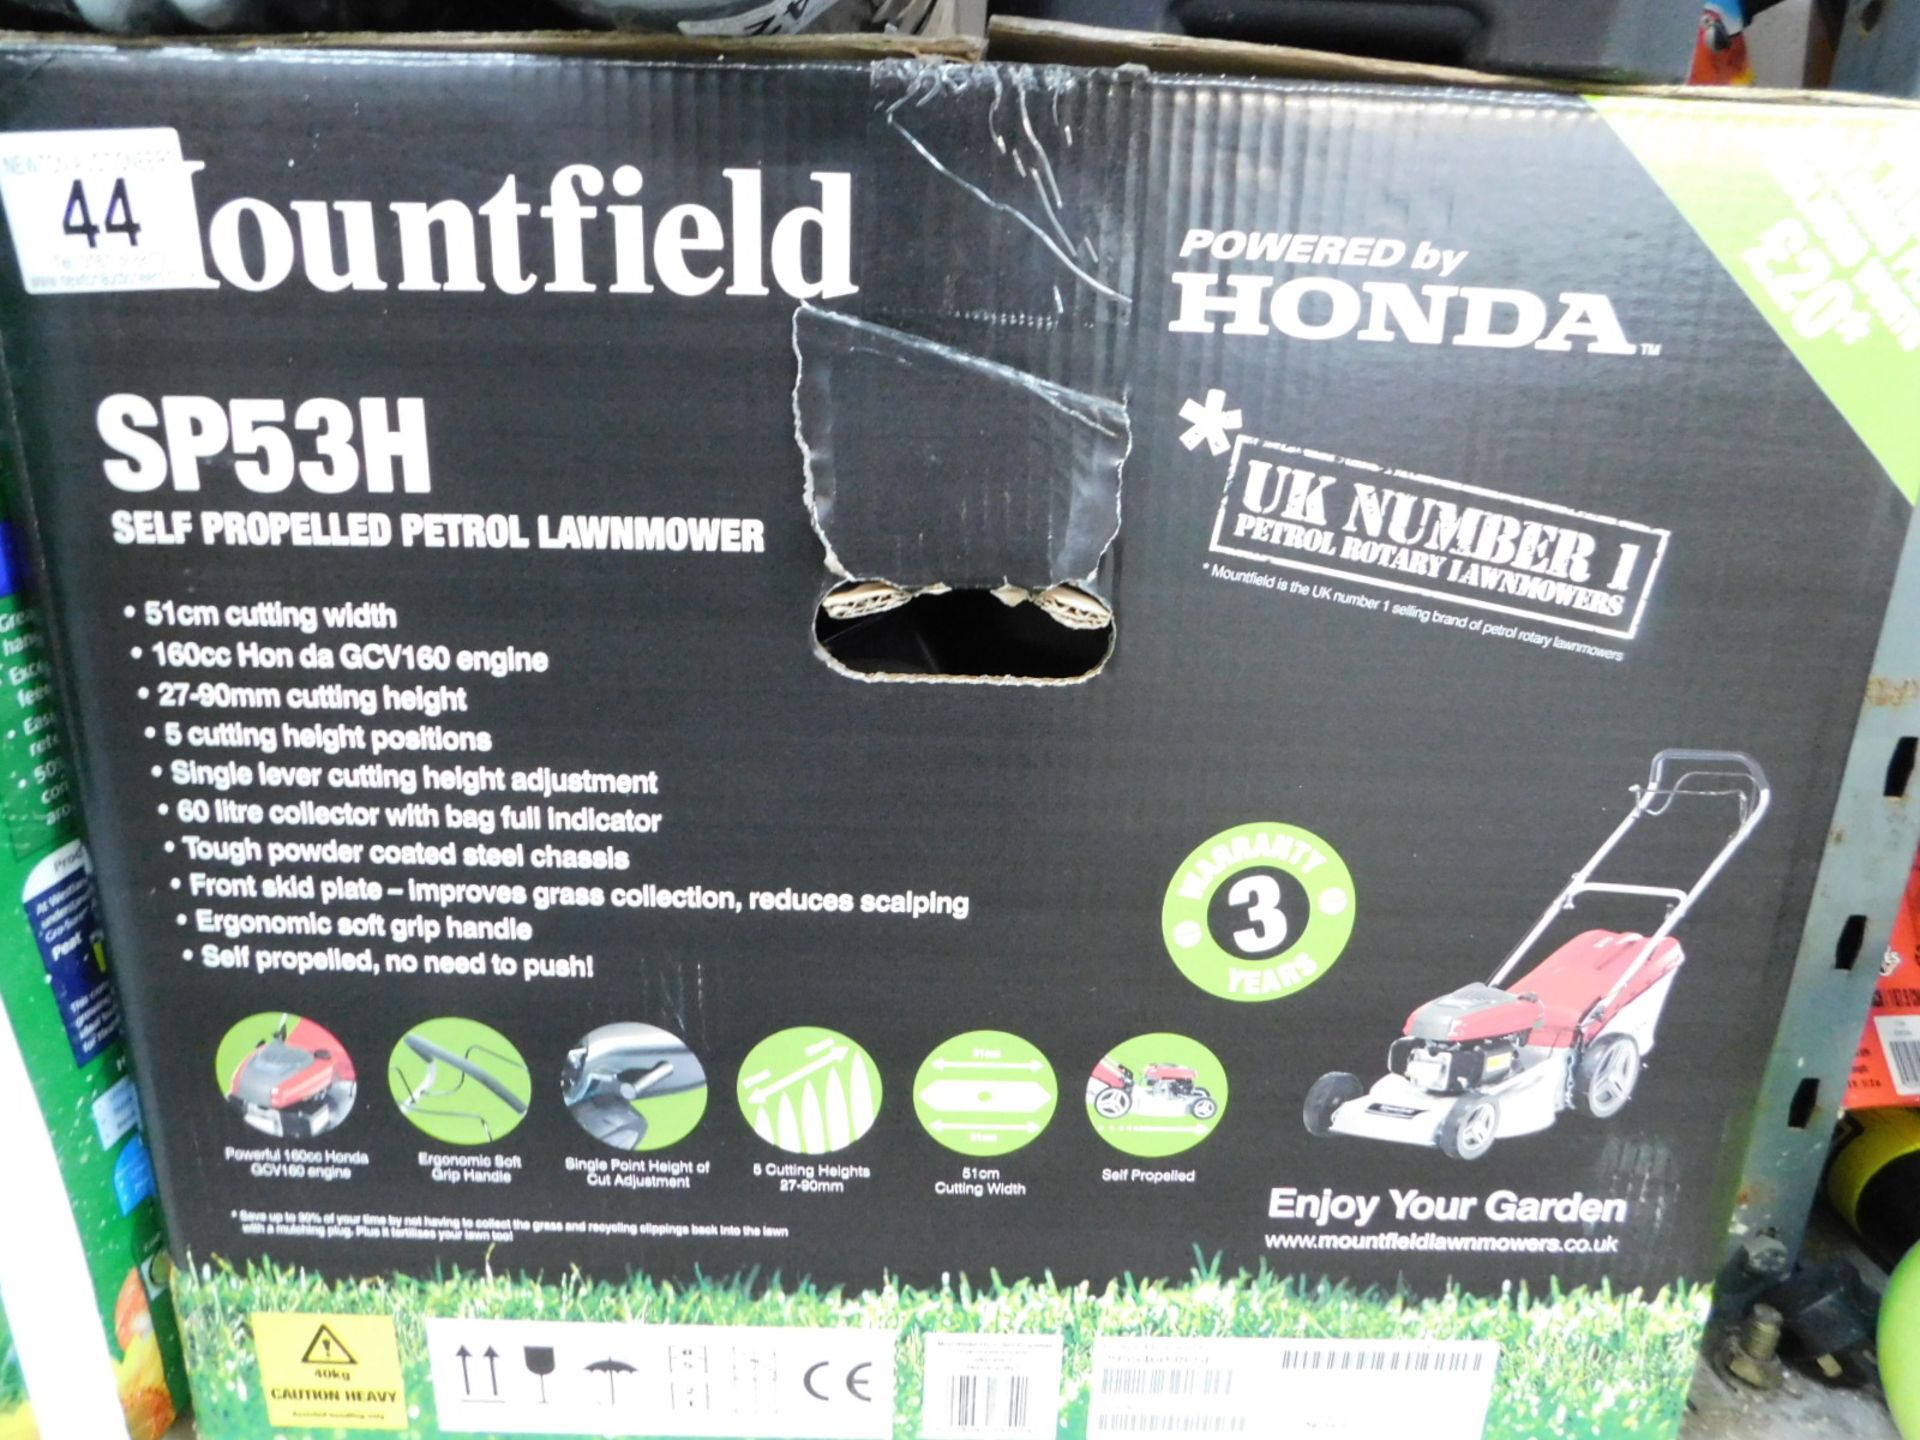 1 BOXED MOUNTFIELD SP53H SELF PROPELLED PETROL LAWNMOWER POWERED BY HONDA RRP £349.99